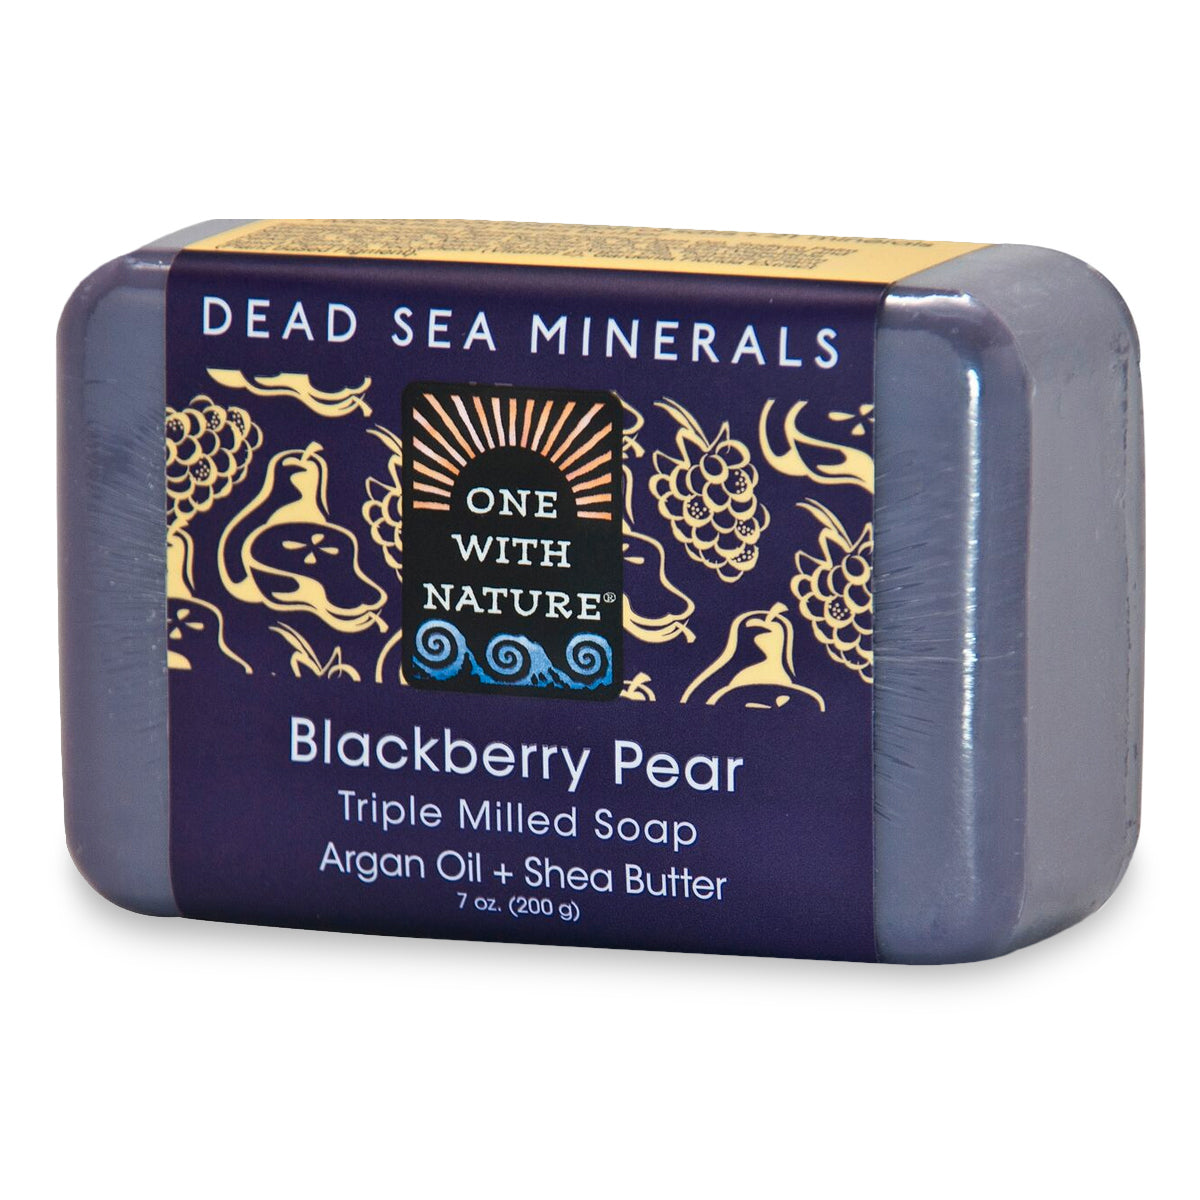 Primary image of Dead Sea Mineral Soap - Blackberry Pear